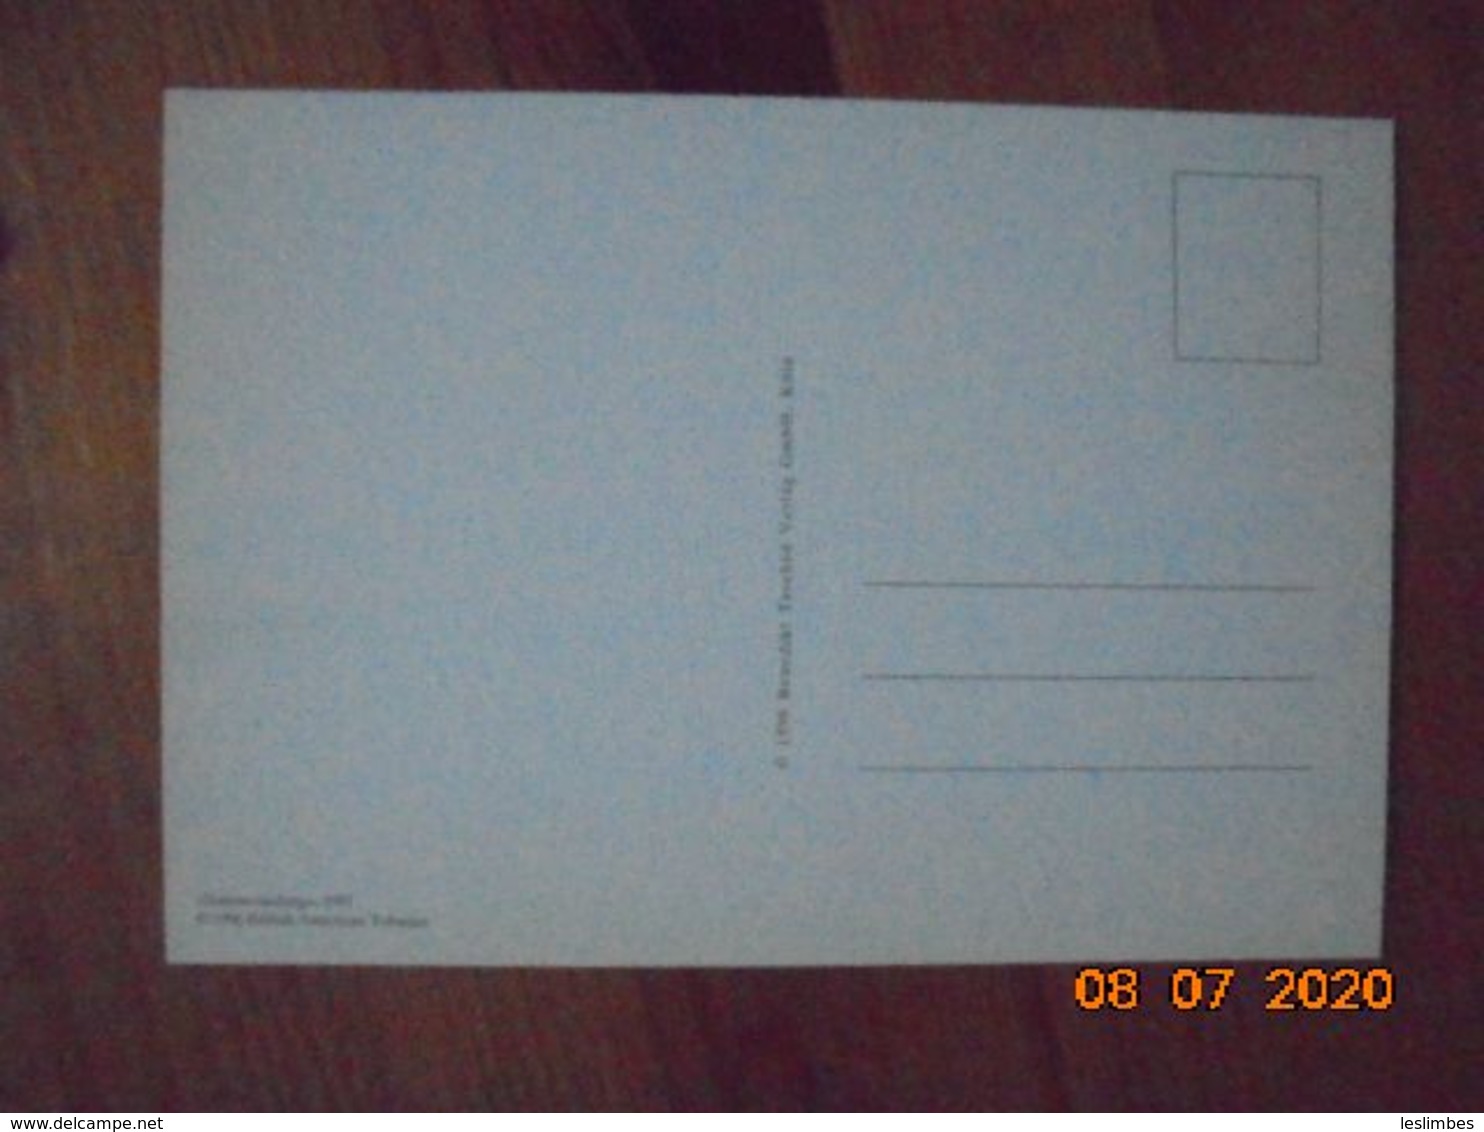 Carte Postale Publicitaire Allemand (Taschen 1996) 16,3 X 11,4 Cm. Lucky Strike. Sonst Nichts. "Sommeranfang" 1991 - Advertising Items